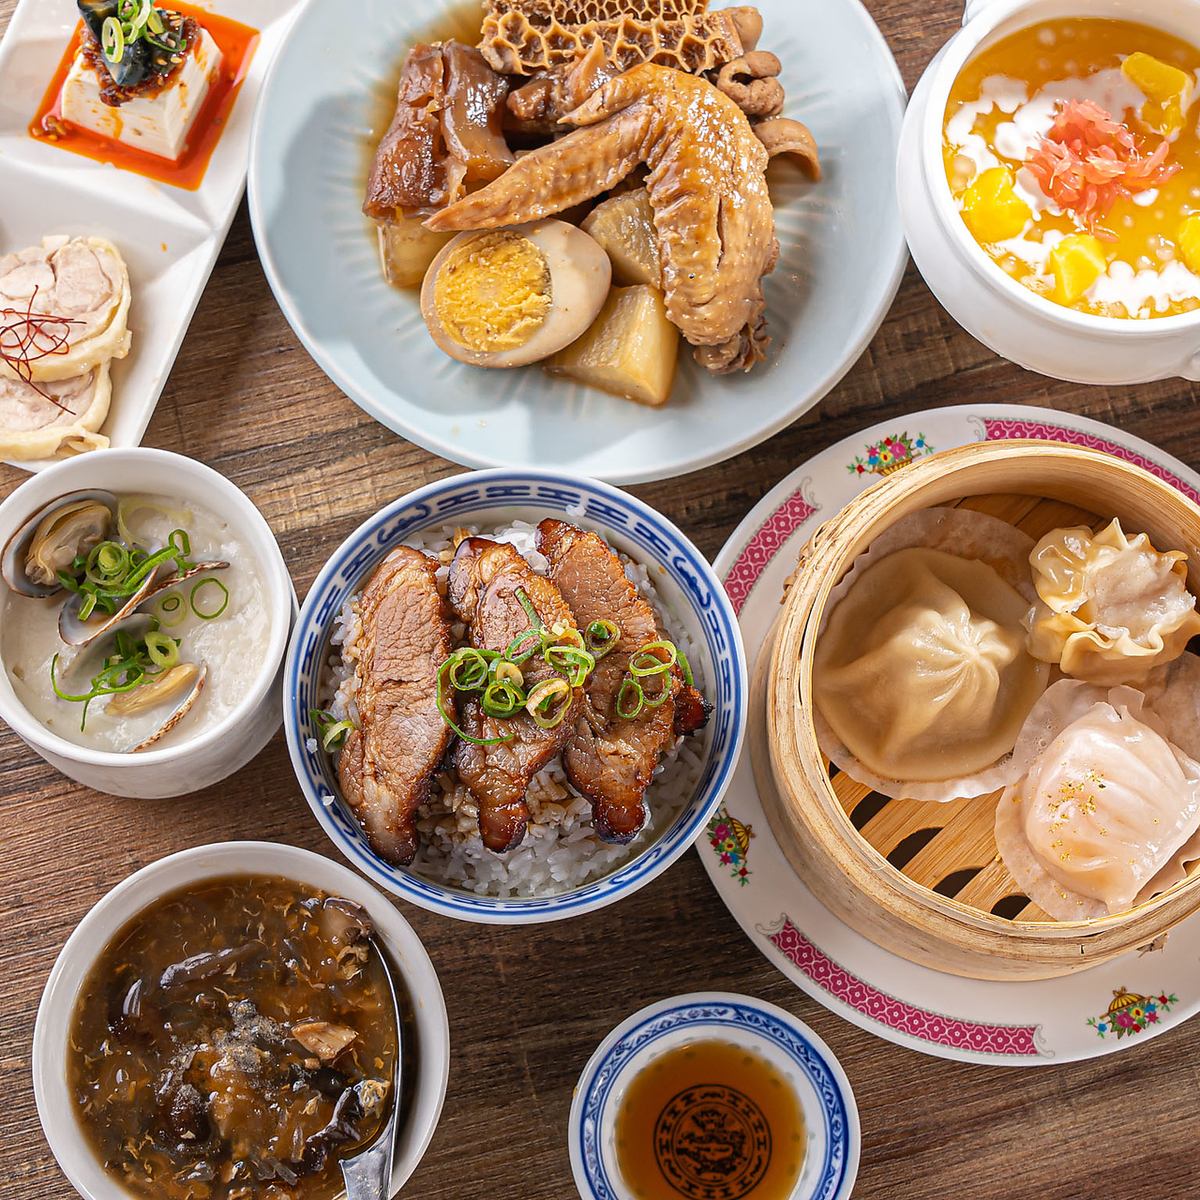 Enjoy authentic Hong Kong cuisine!